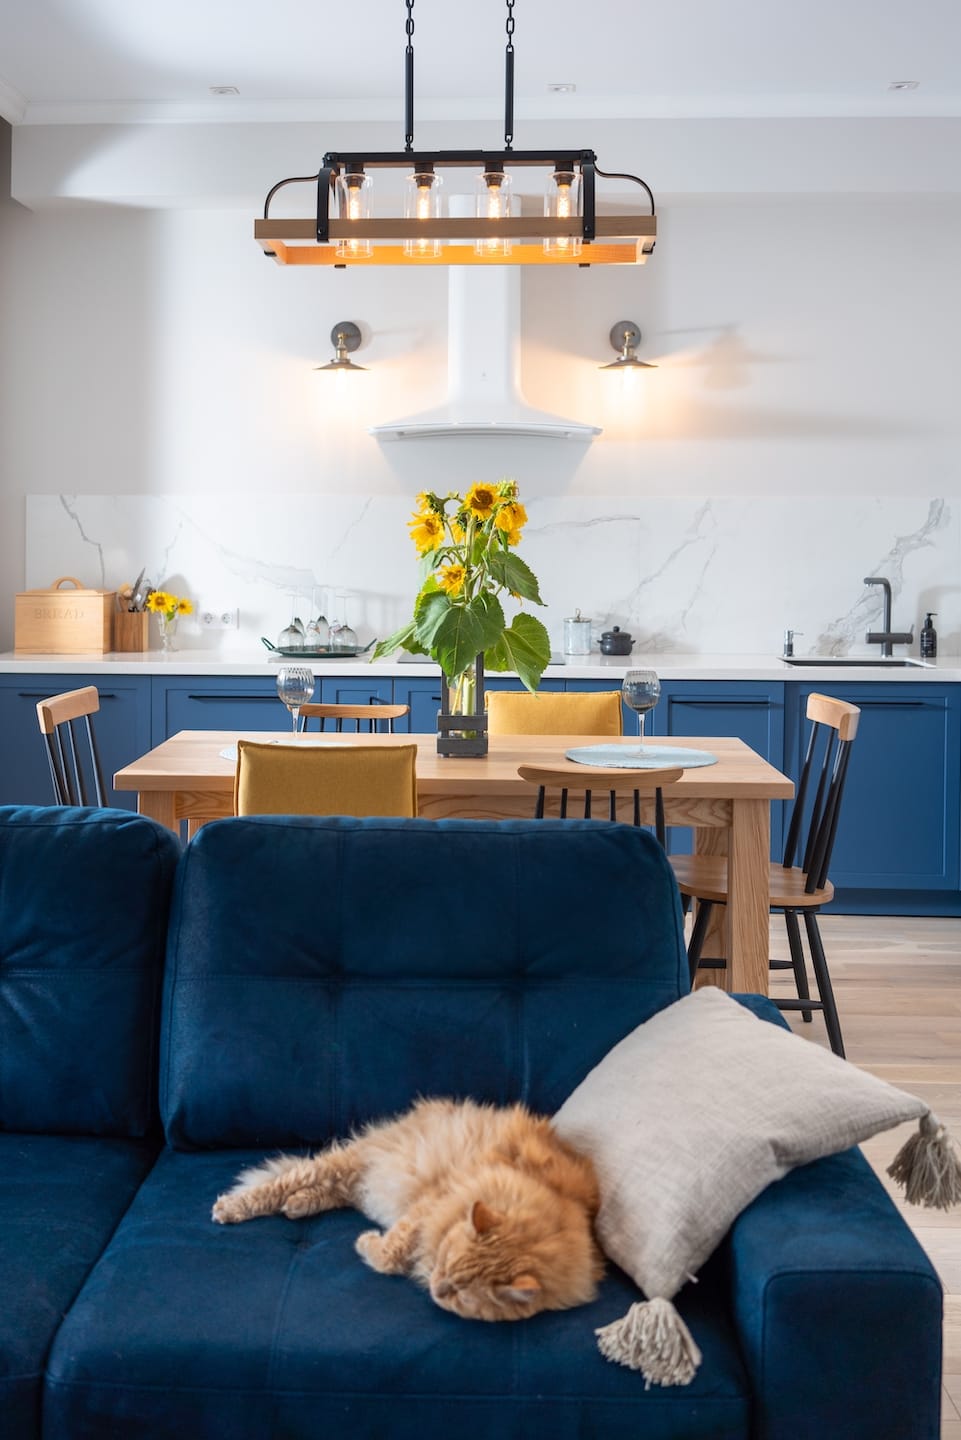 modern-scandinavian-cozy-kitchen-and-sleeping-cat-2022-11-16-23-03-46-utc-1.jpg